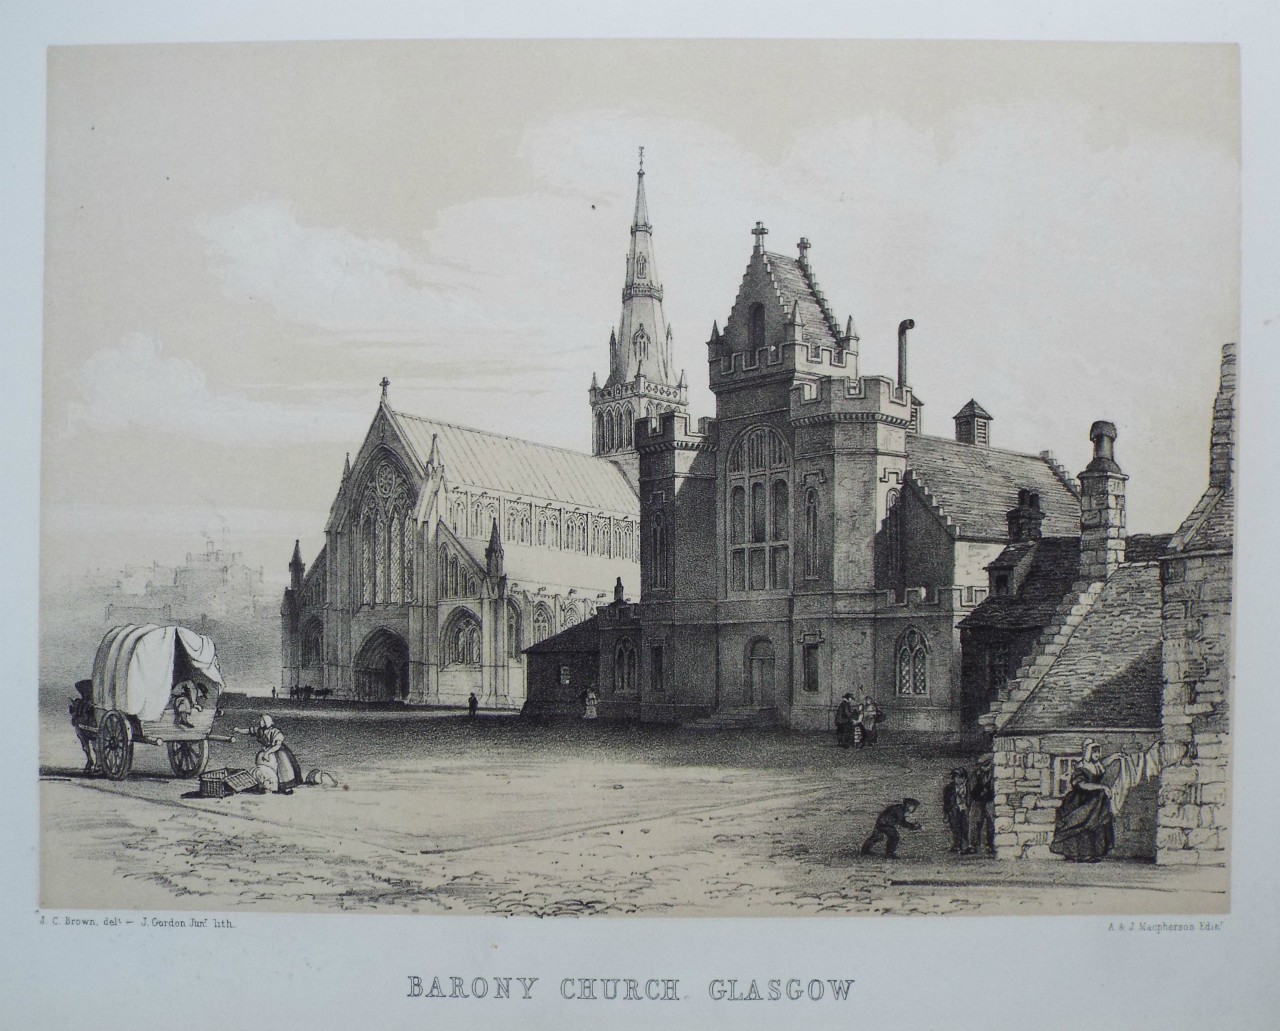 Lithograph - Barony Church, Glasgow - Gordon